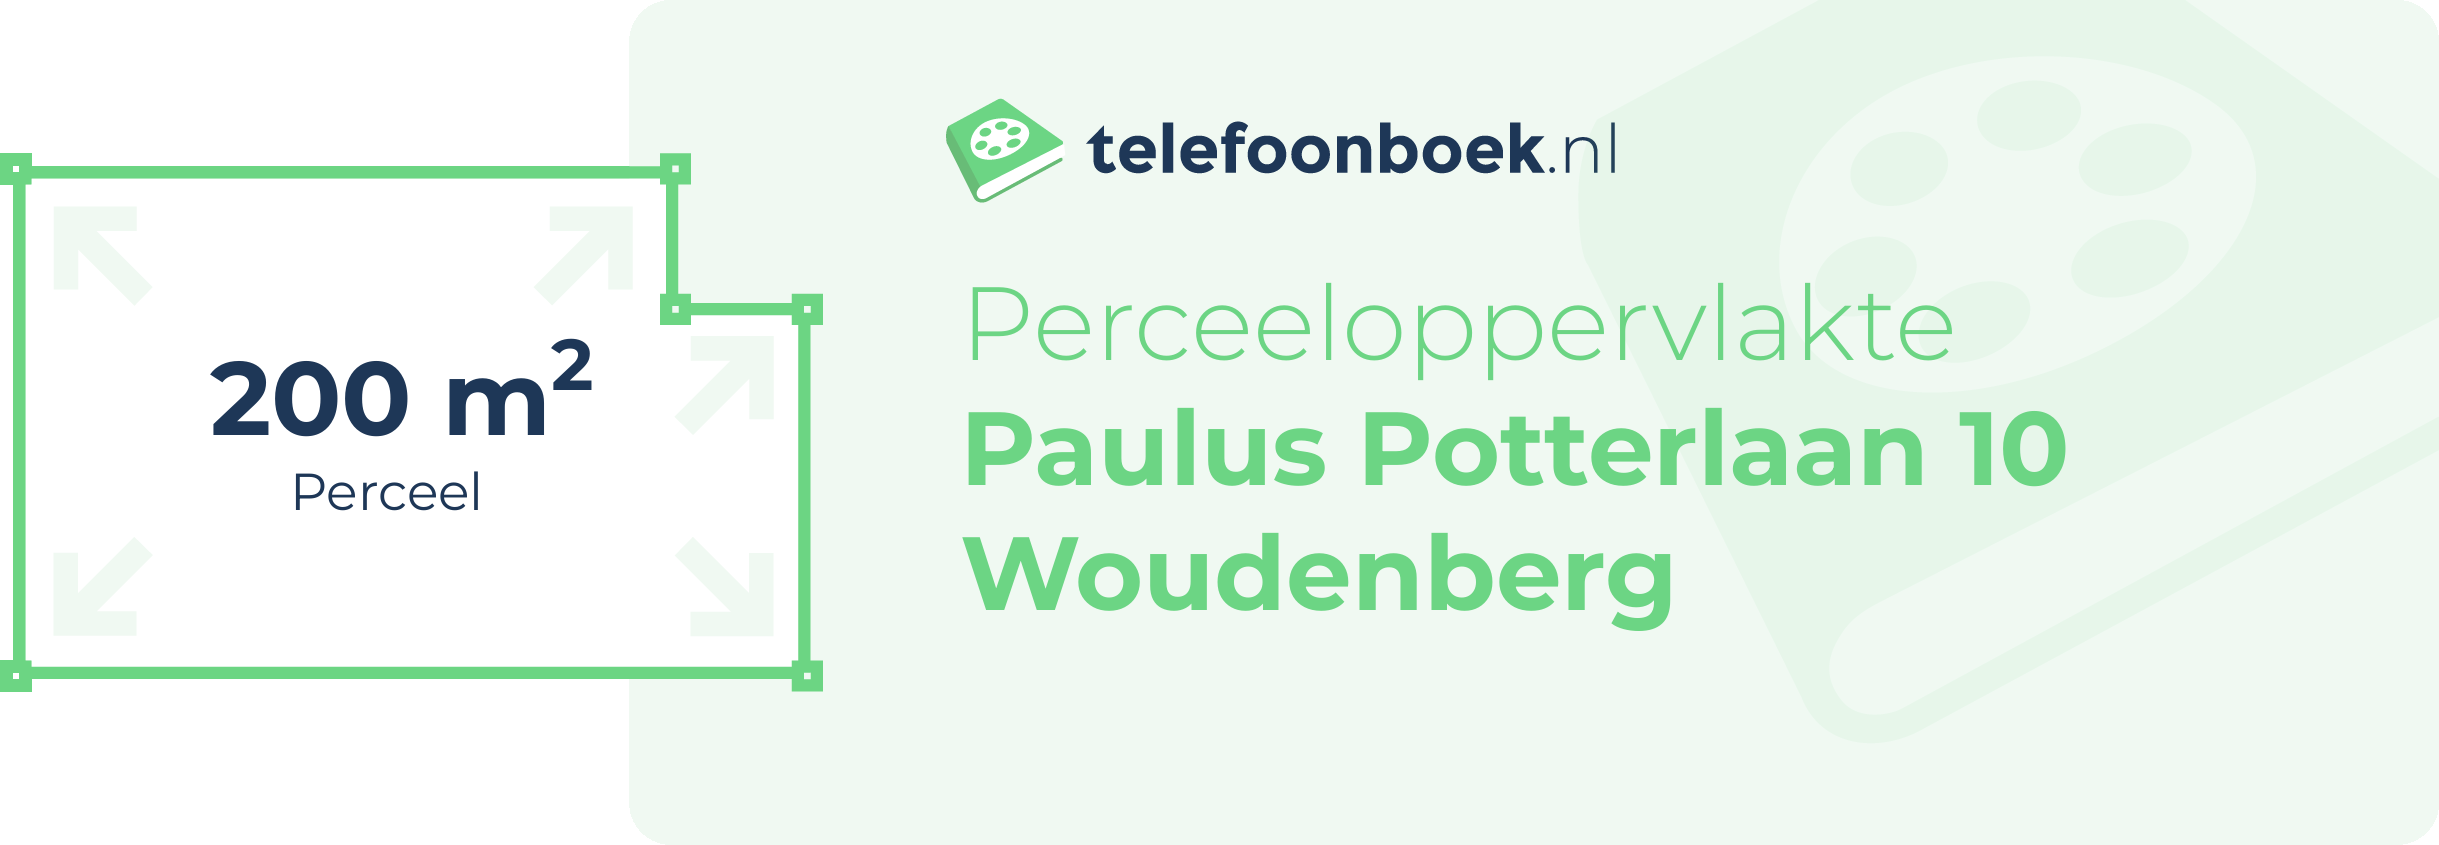 Perceeloppervlakte Paulus Potterlaan 10 Woudenberg